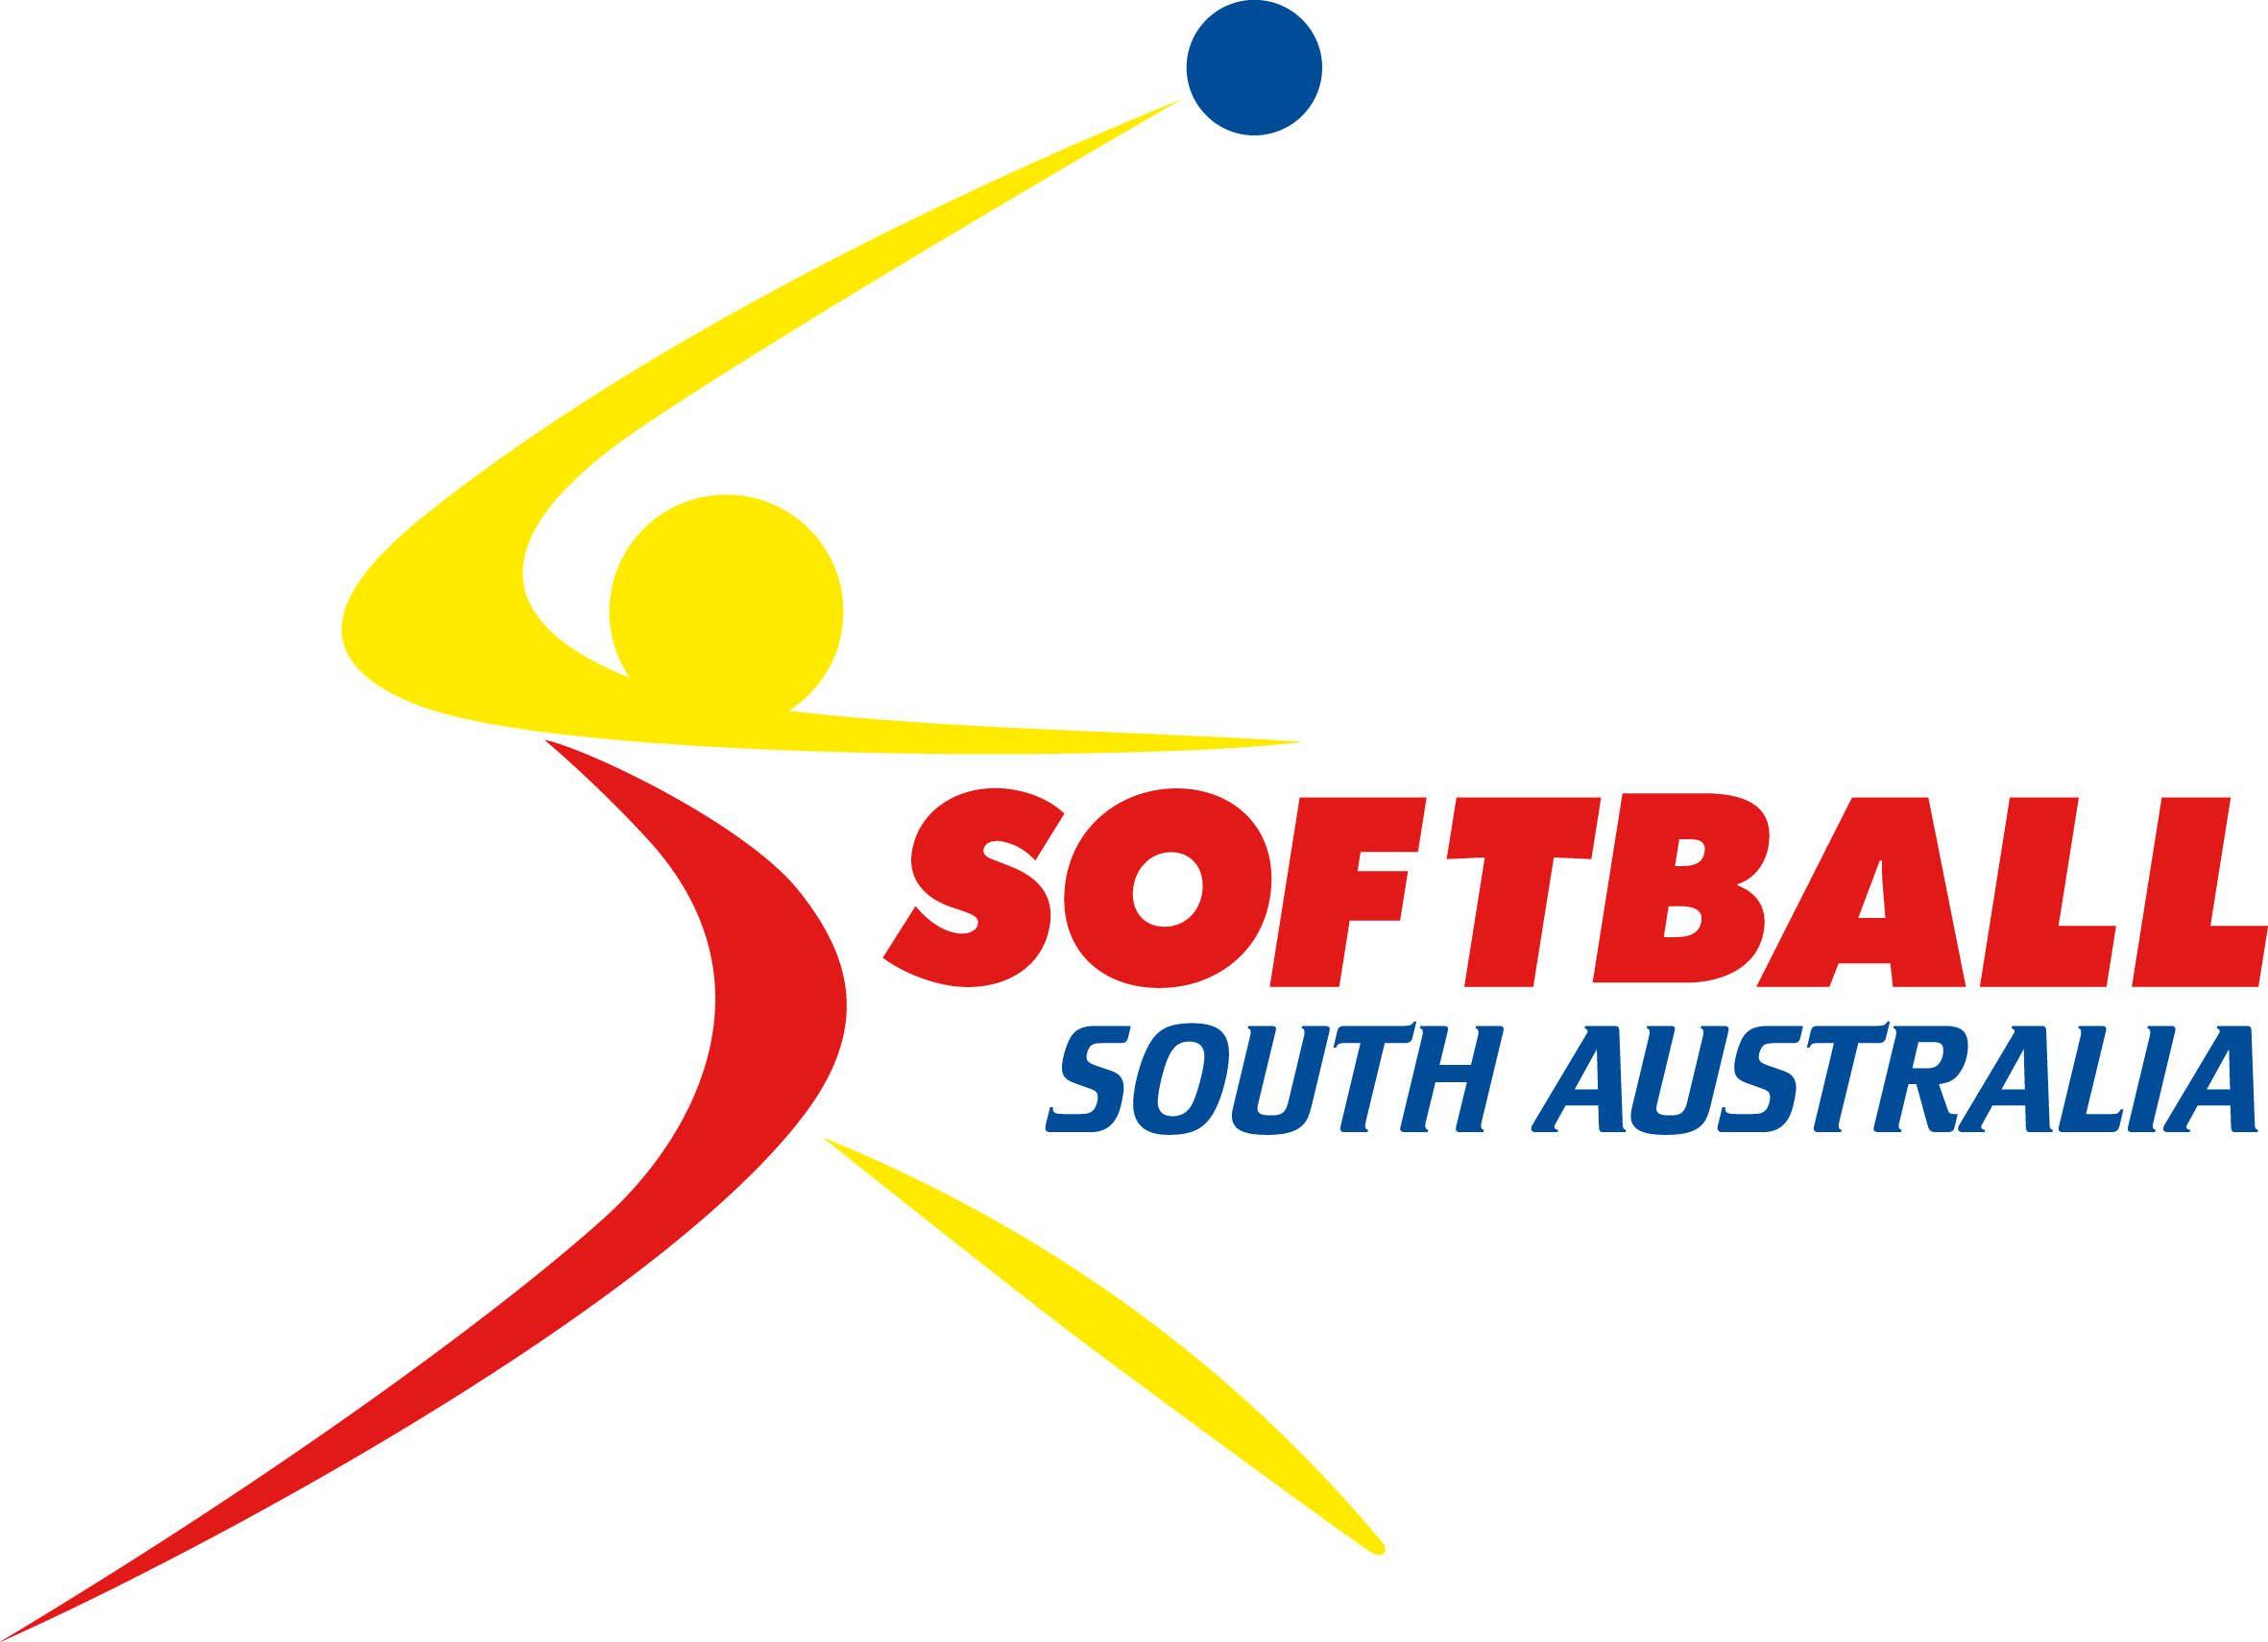 Red Blue and White Softball Logo - U15 Girls' Regional Softball Championship